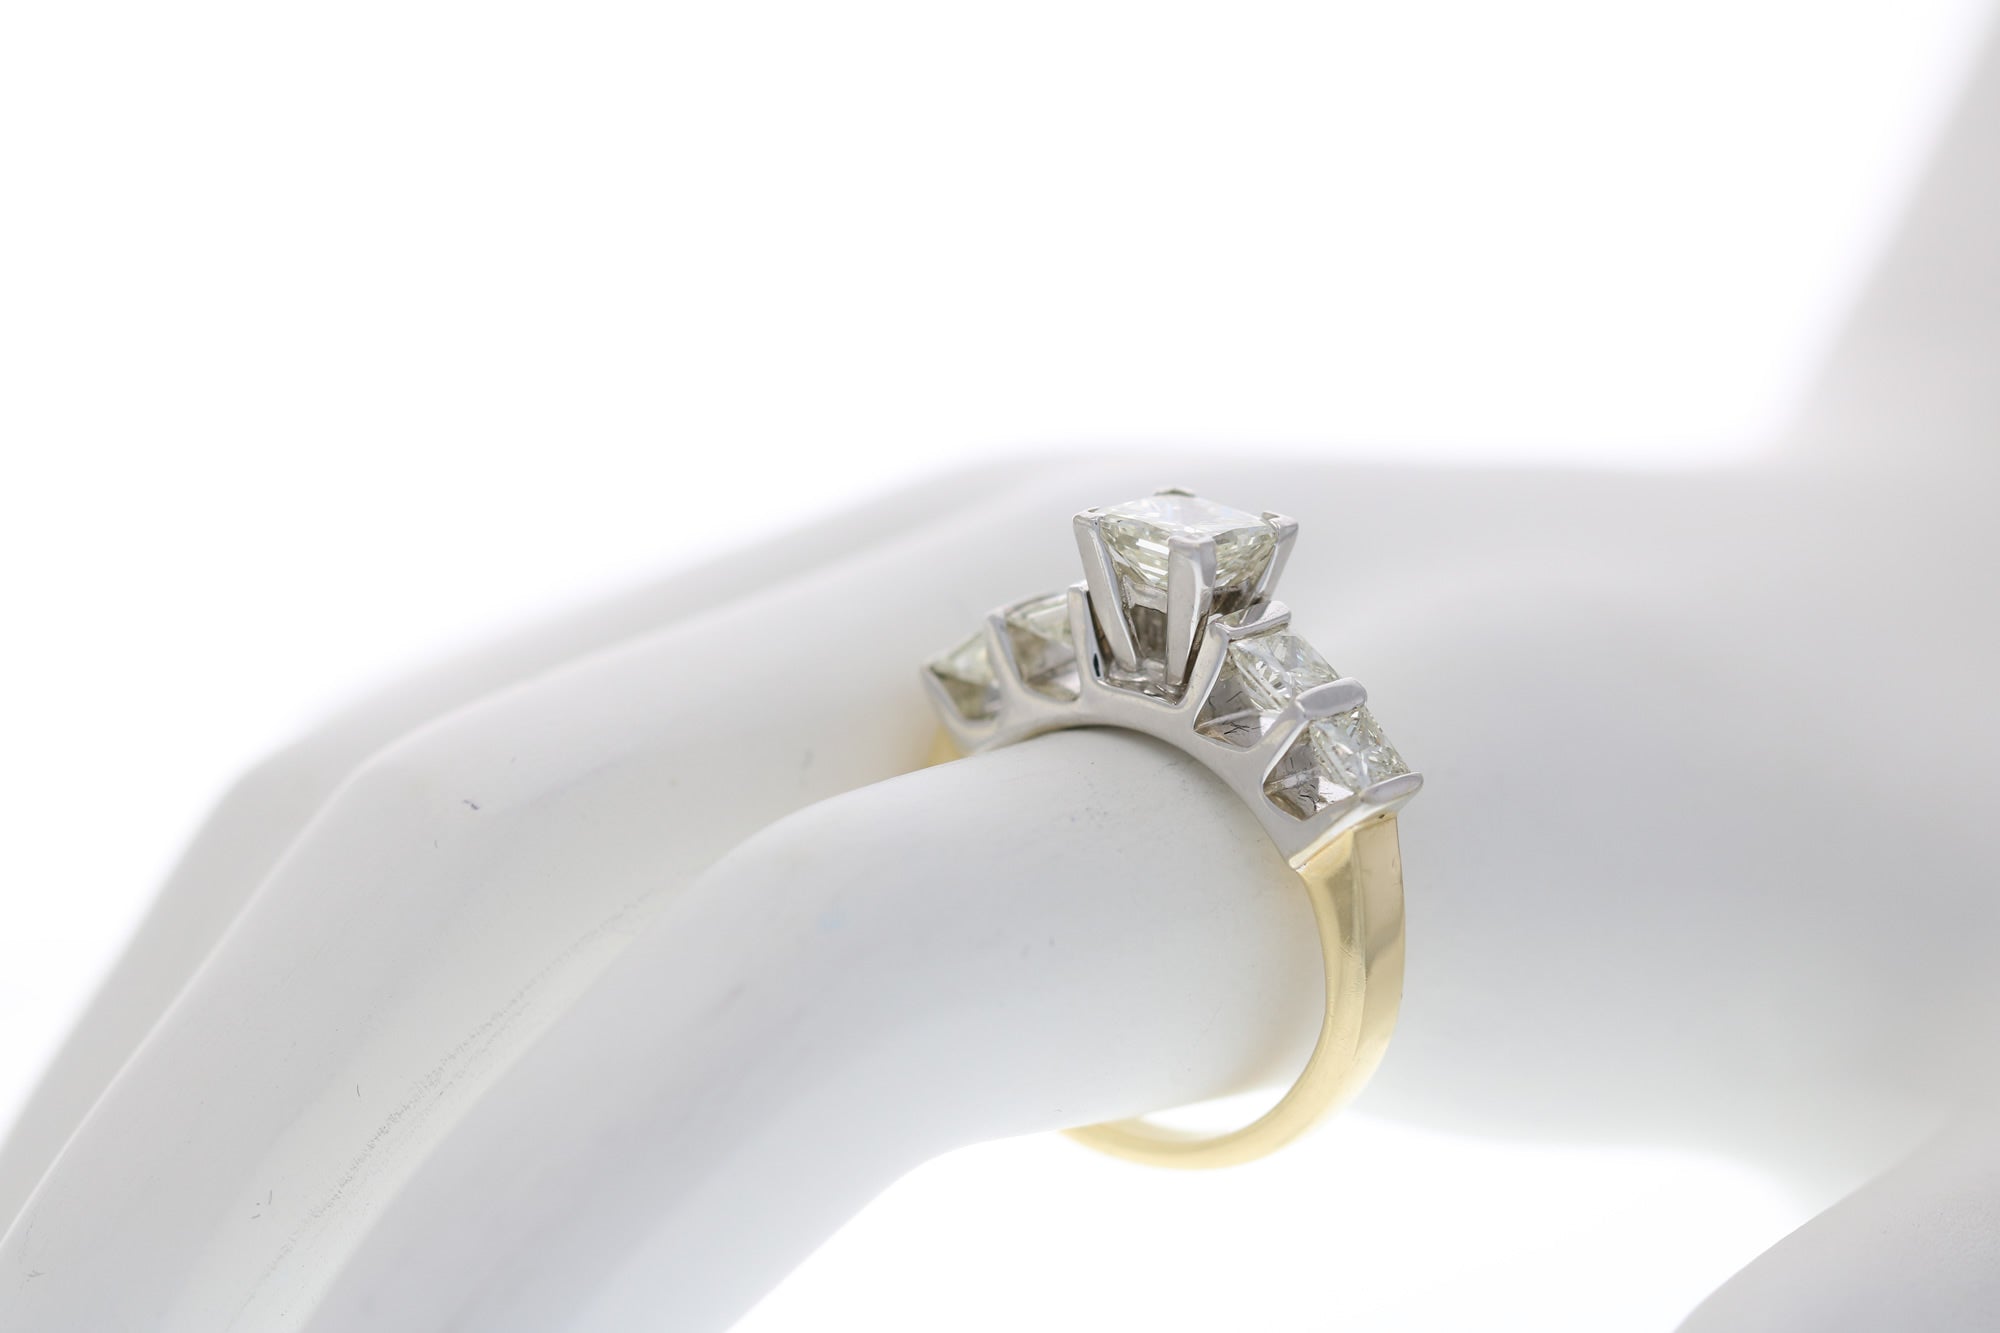 1.75 cttw 5 Stone Princess Cut Diamond Engagement Ring 14K Yellow Gold SI2-I1